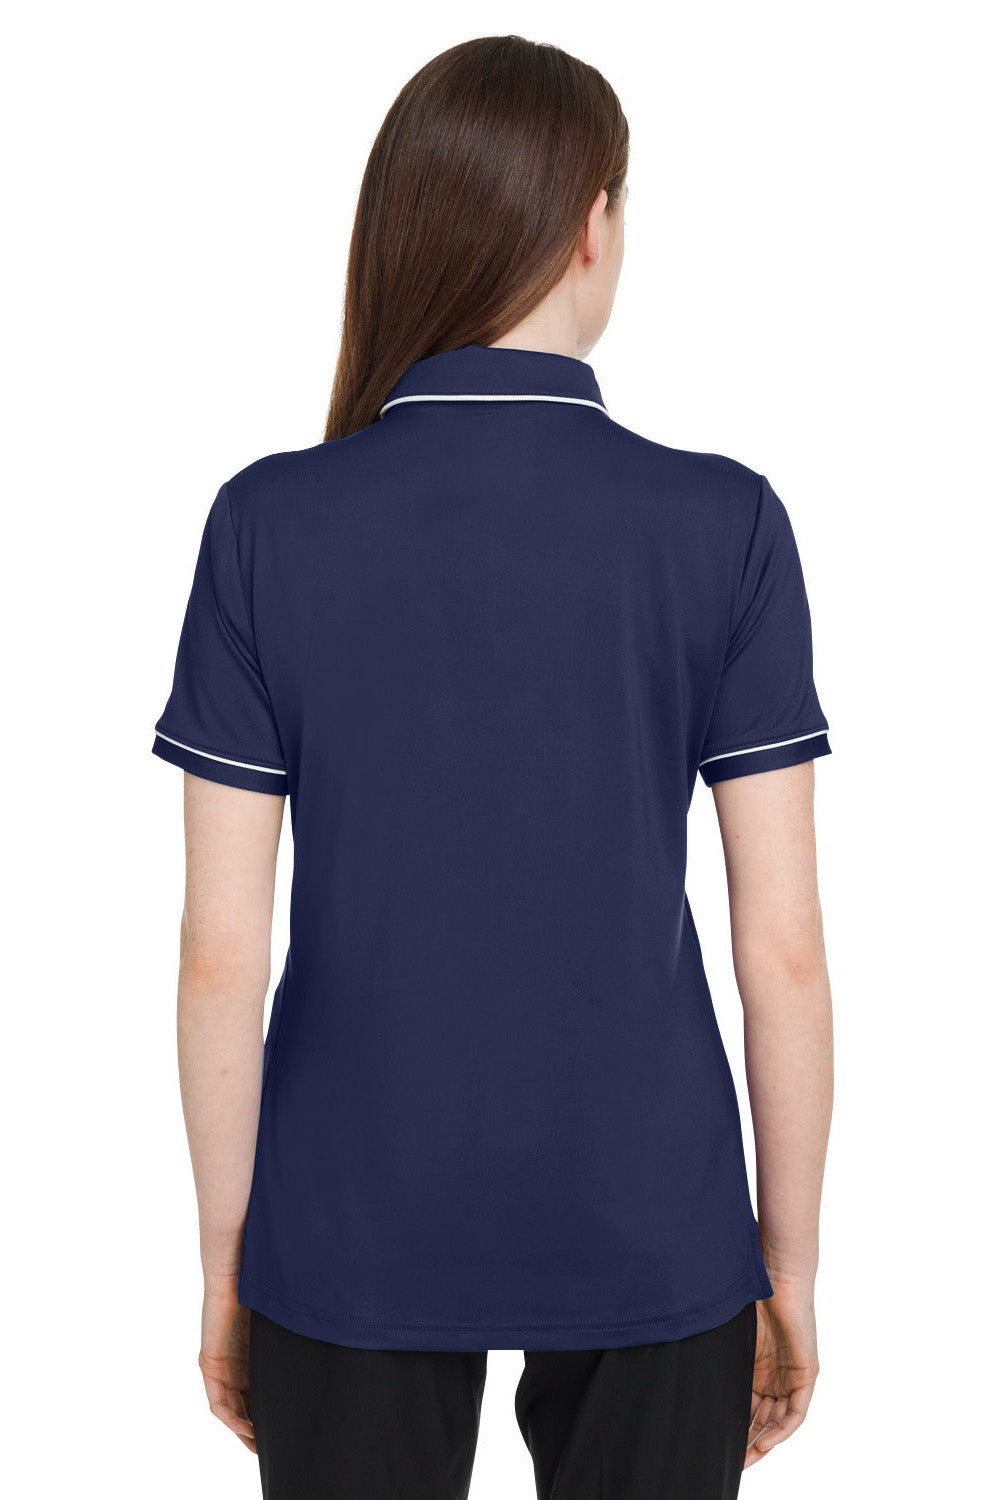 Under Armour 1376905 Womens Teams Performance Moisture Wicking Short Sleeve Polo Shirt Midnight Navy Blue Model Back